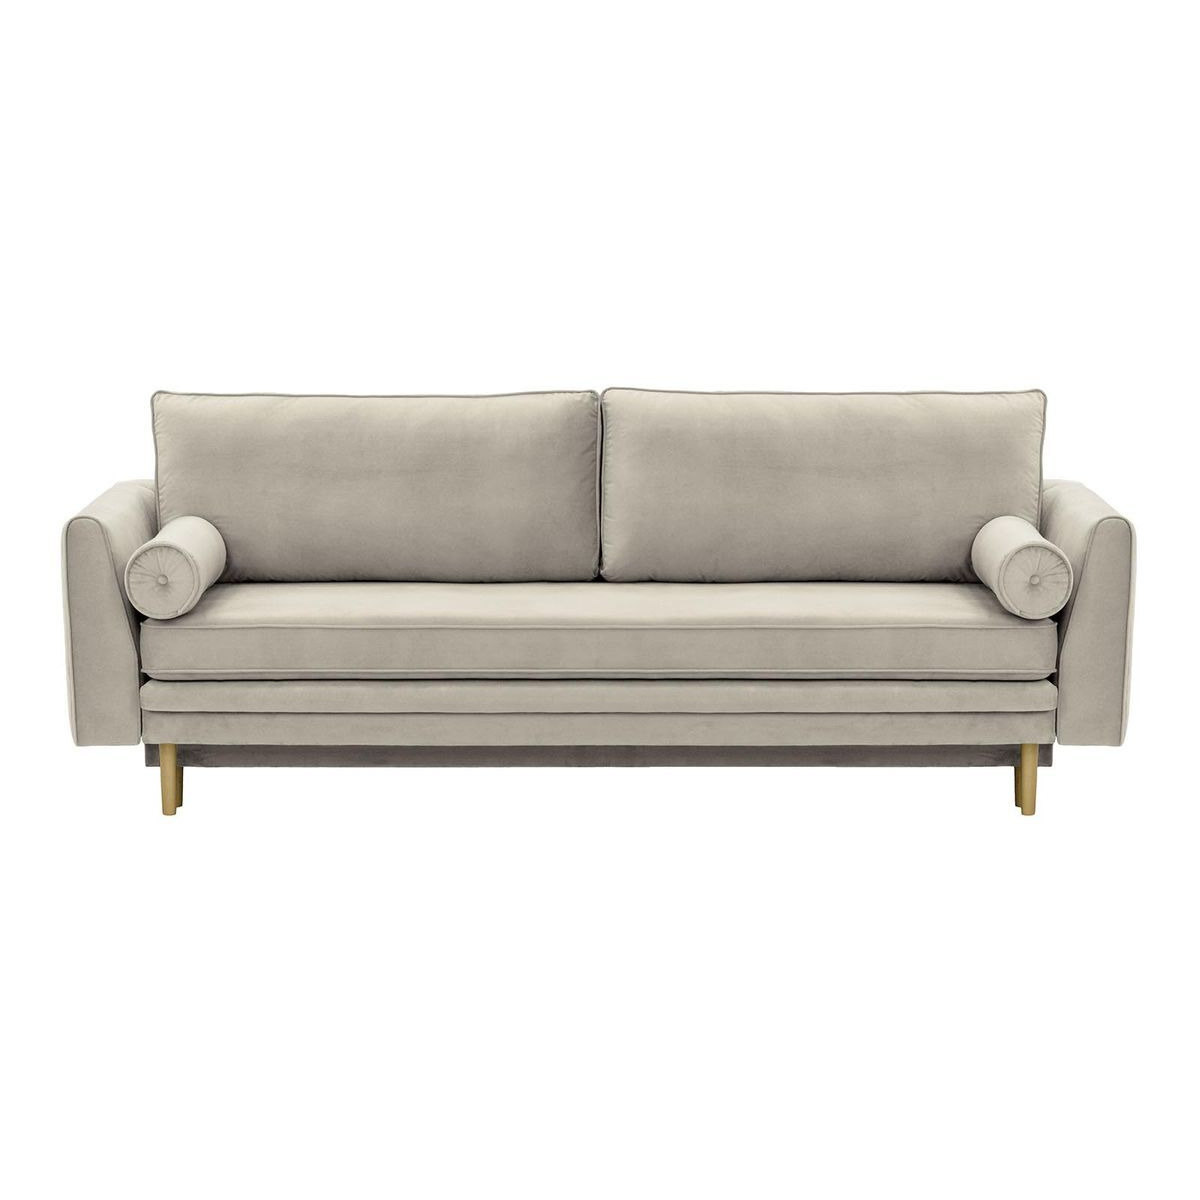 Boris Sofa Bed with Storage, silver, Leg colour: wax black - image 1